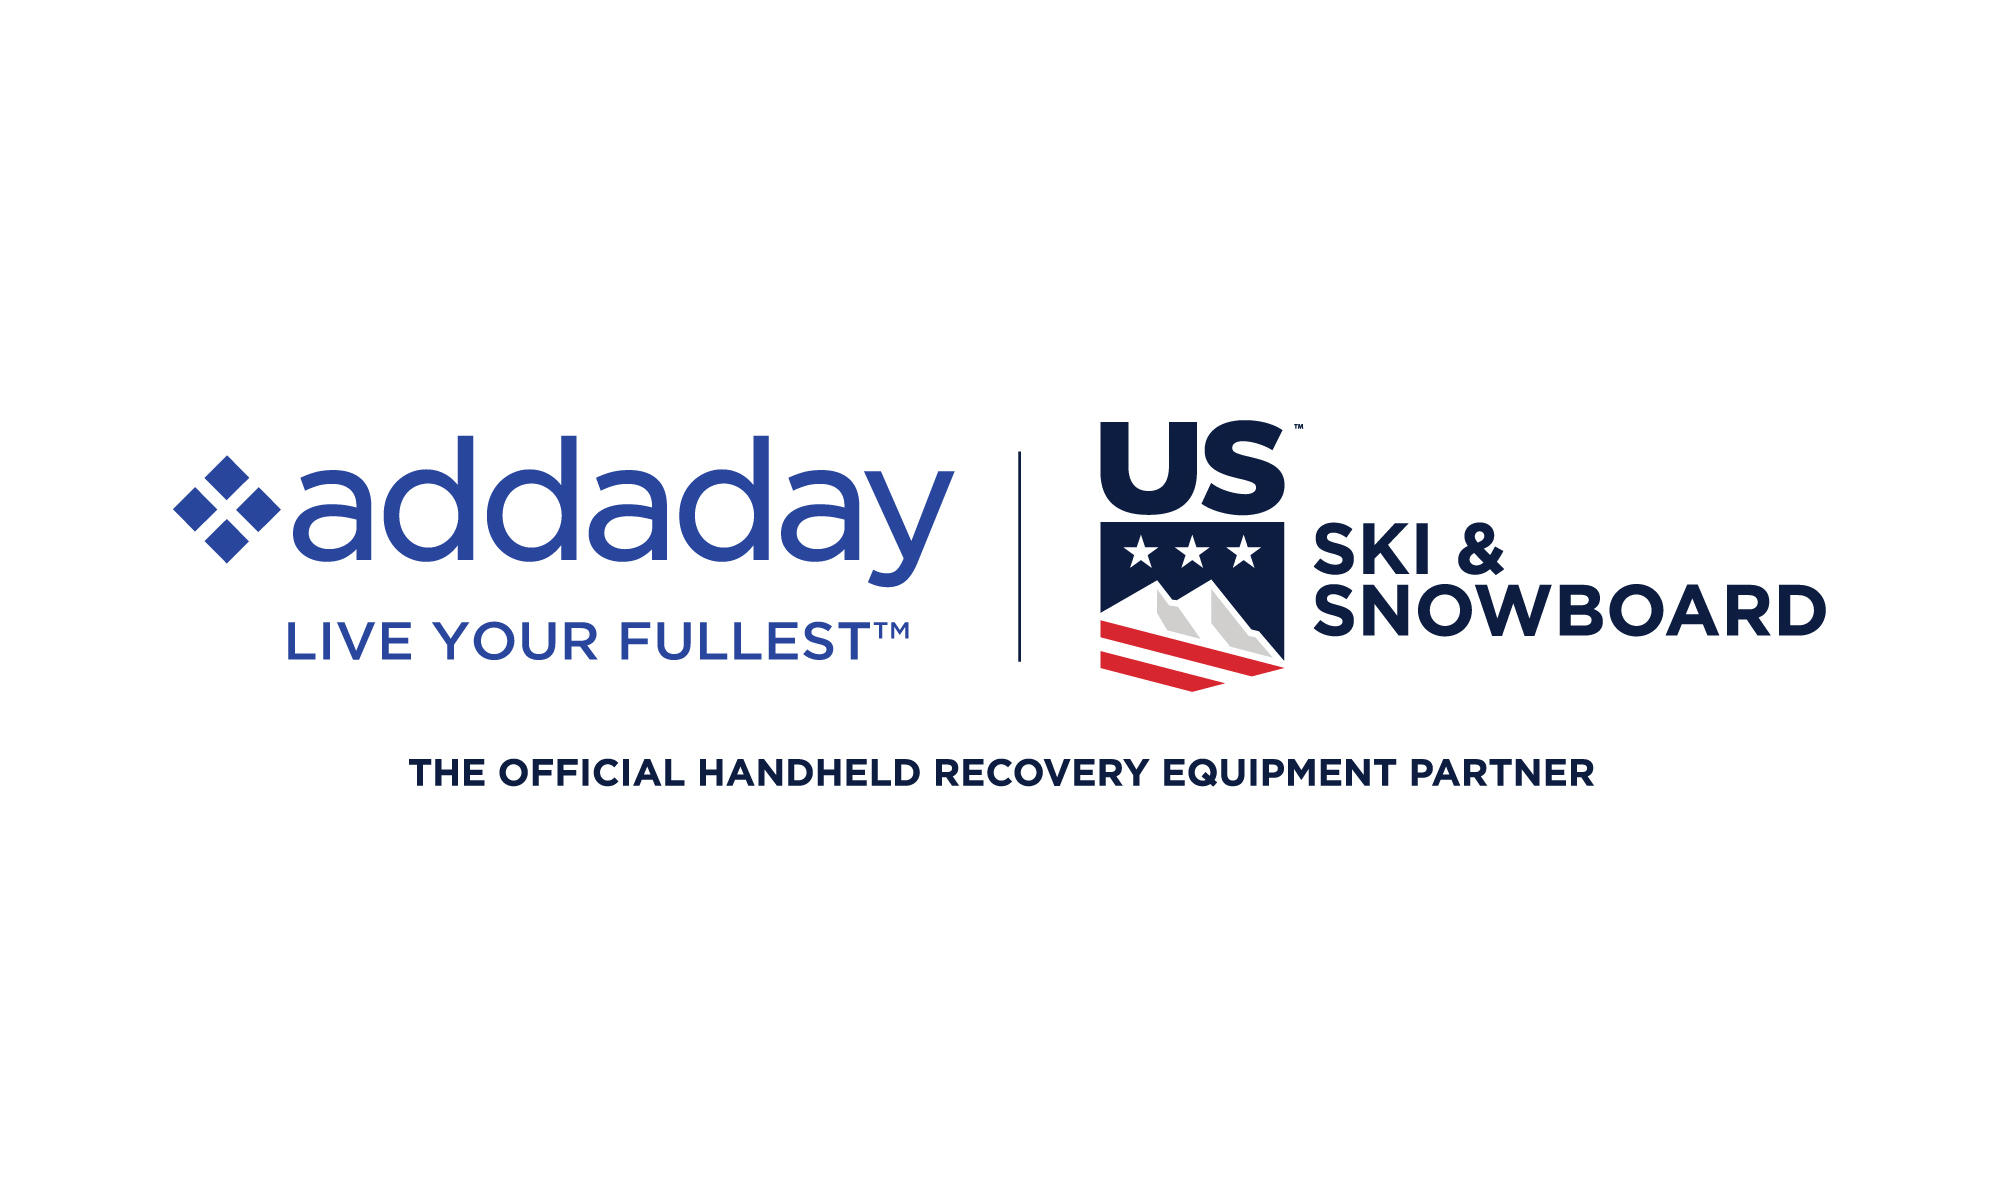 U.S. Ski & Snowboard x Addaday